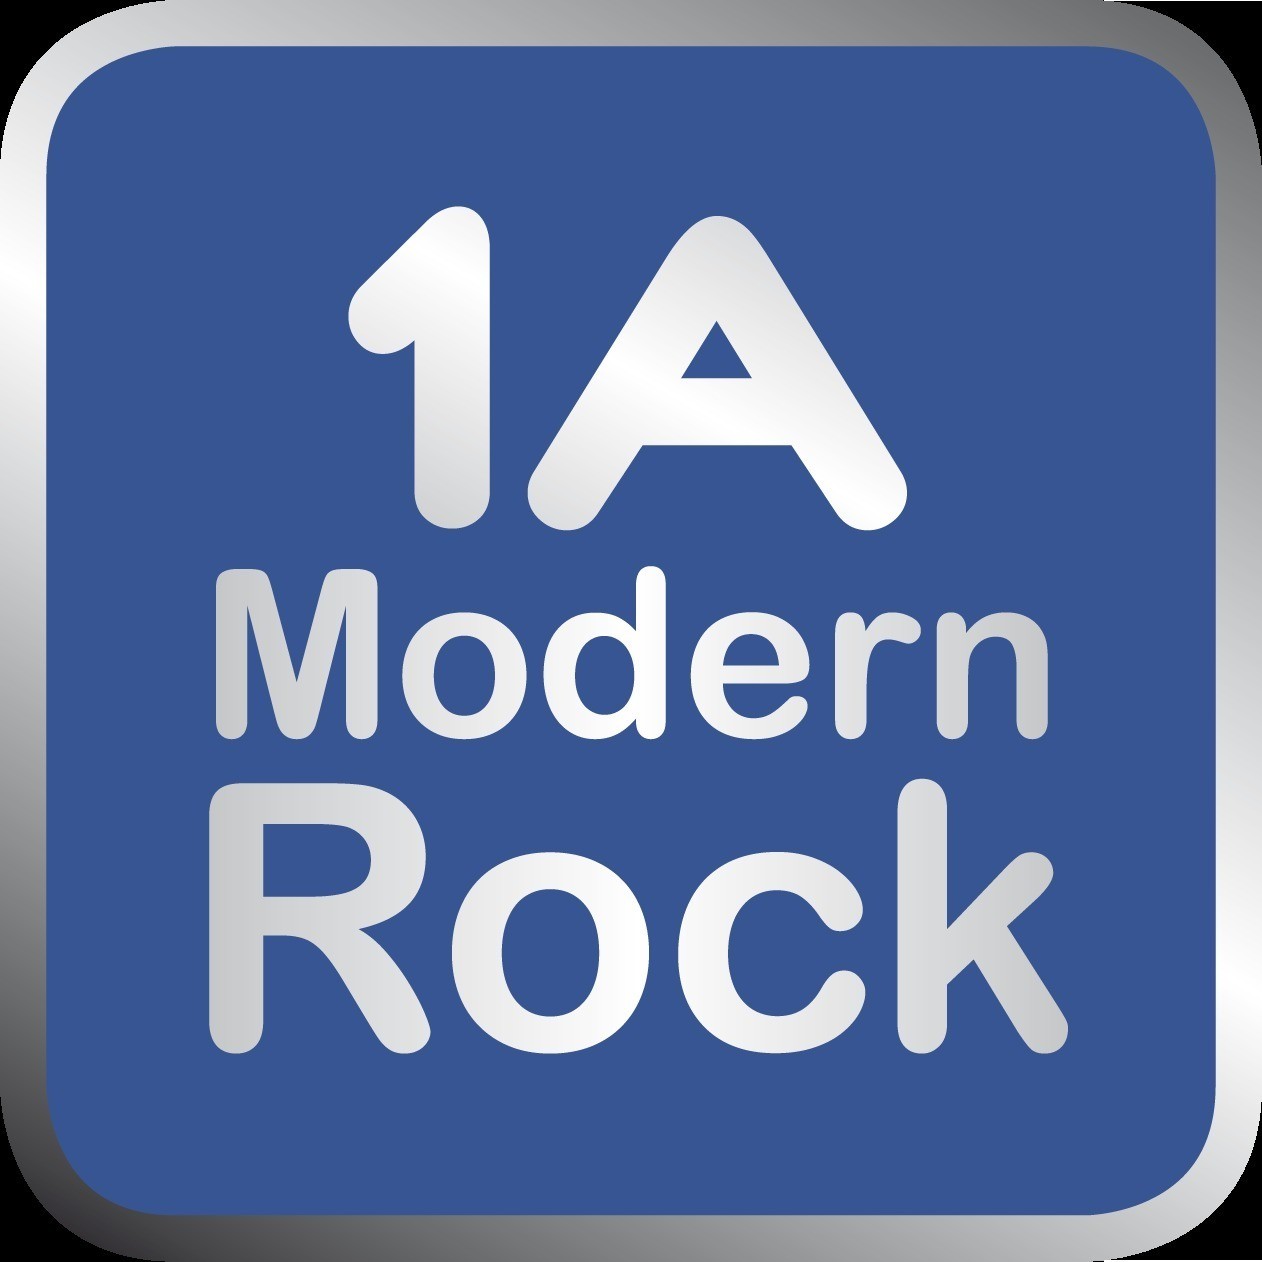 Profilo 1A Modern Rock Canal Tv